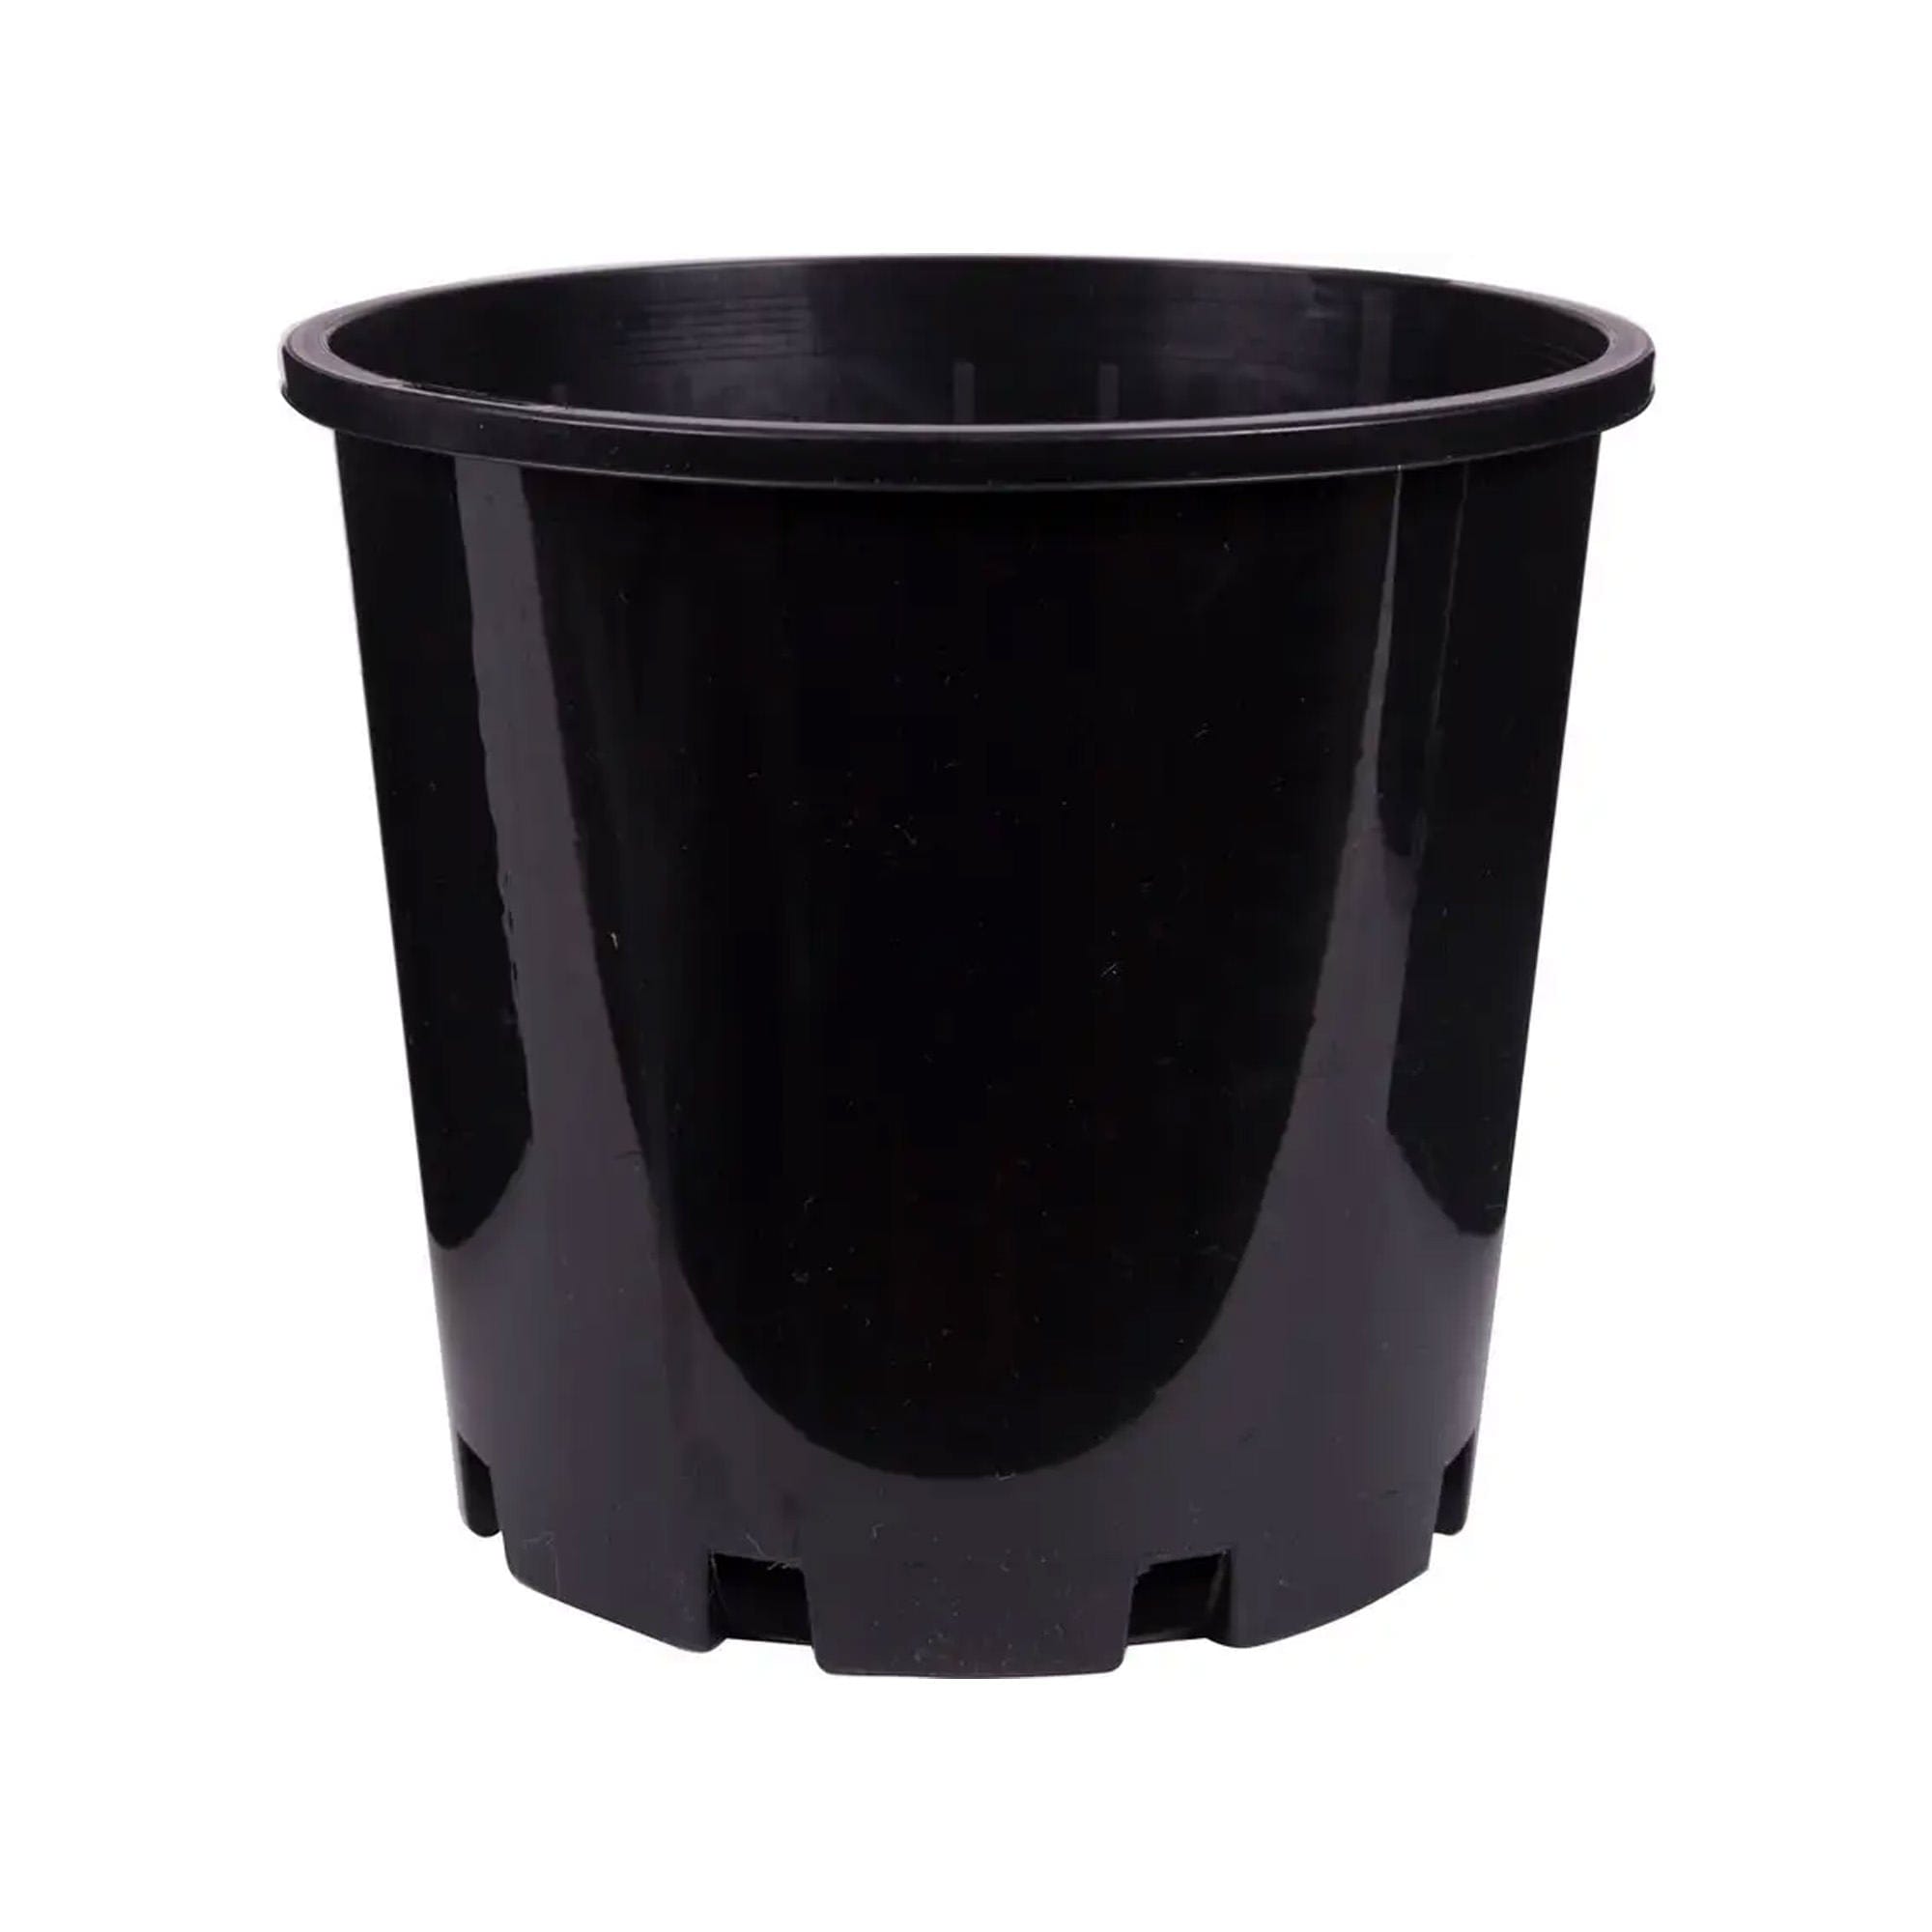 Dr Greenthumbs Pot Round Black 200mm (Regular & Squat Options)